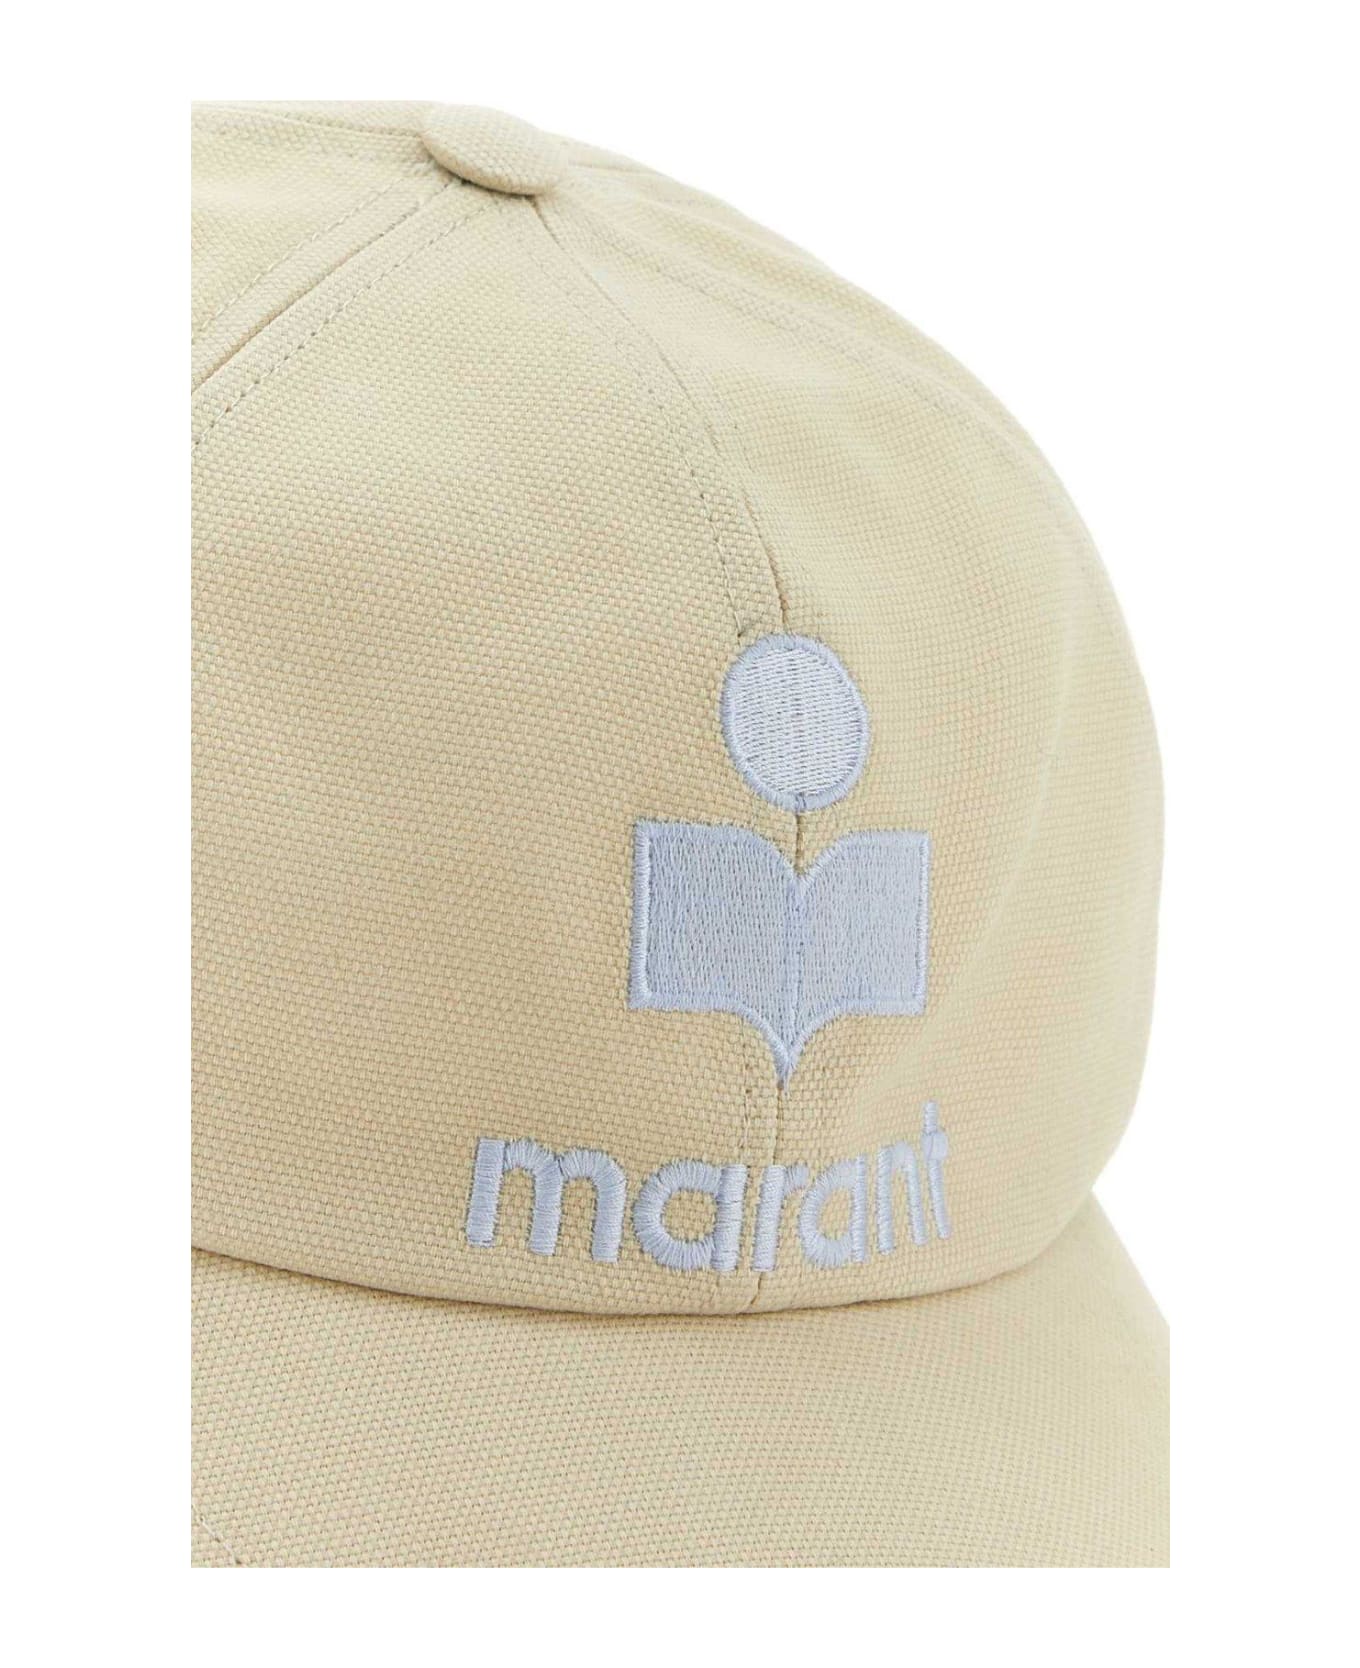 Isabel Marant Logo Embroidered Curved-peak Baseball Cap - ECRU/LIGHT BLUE